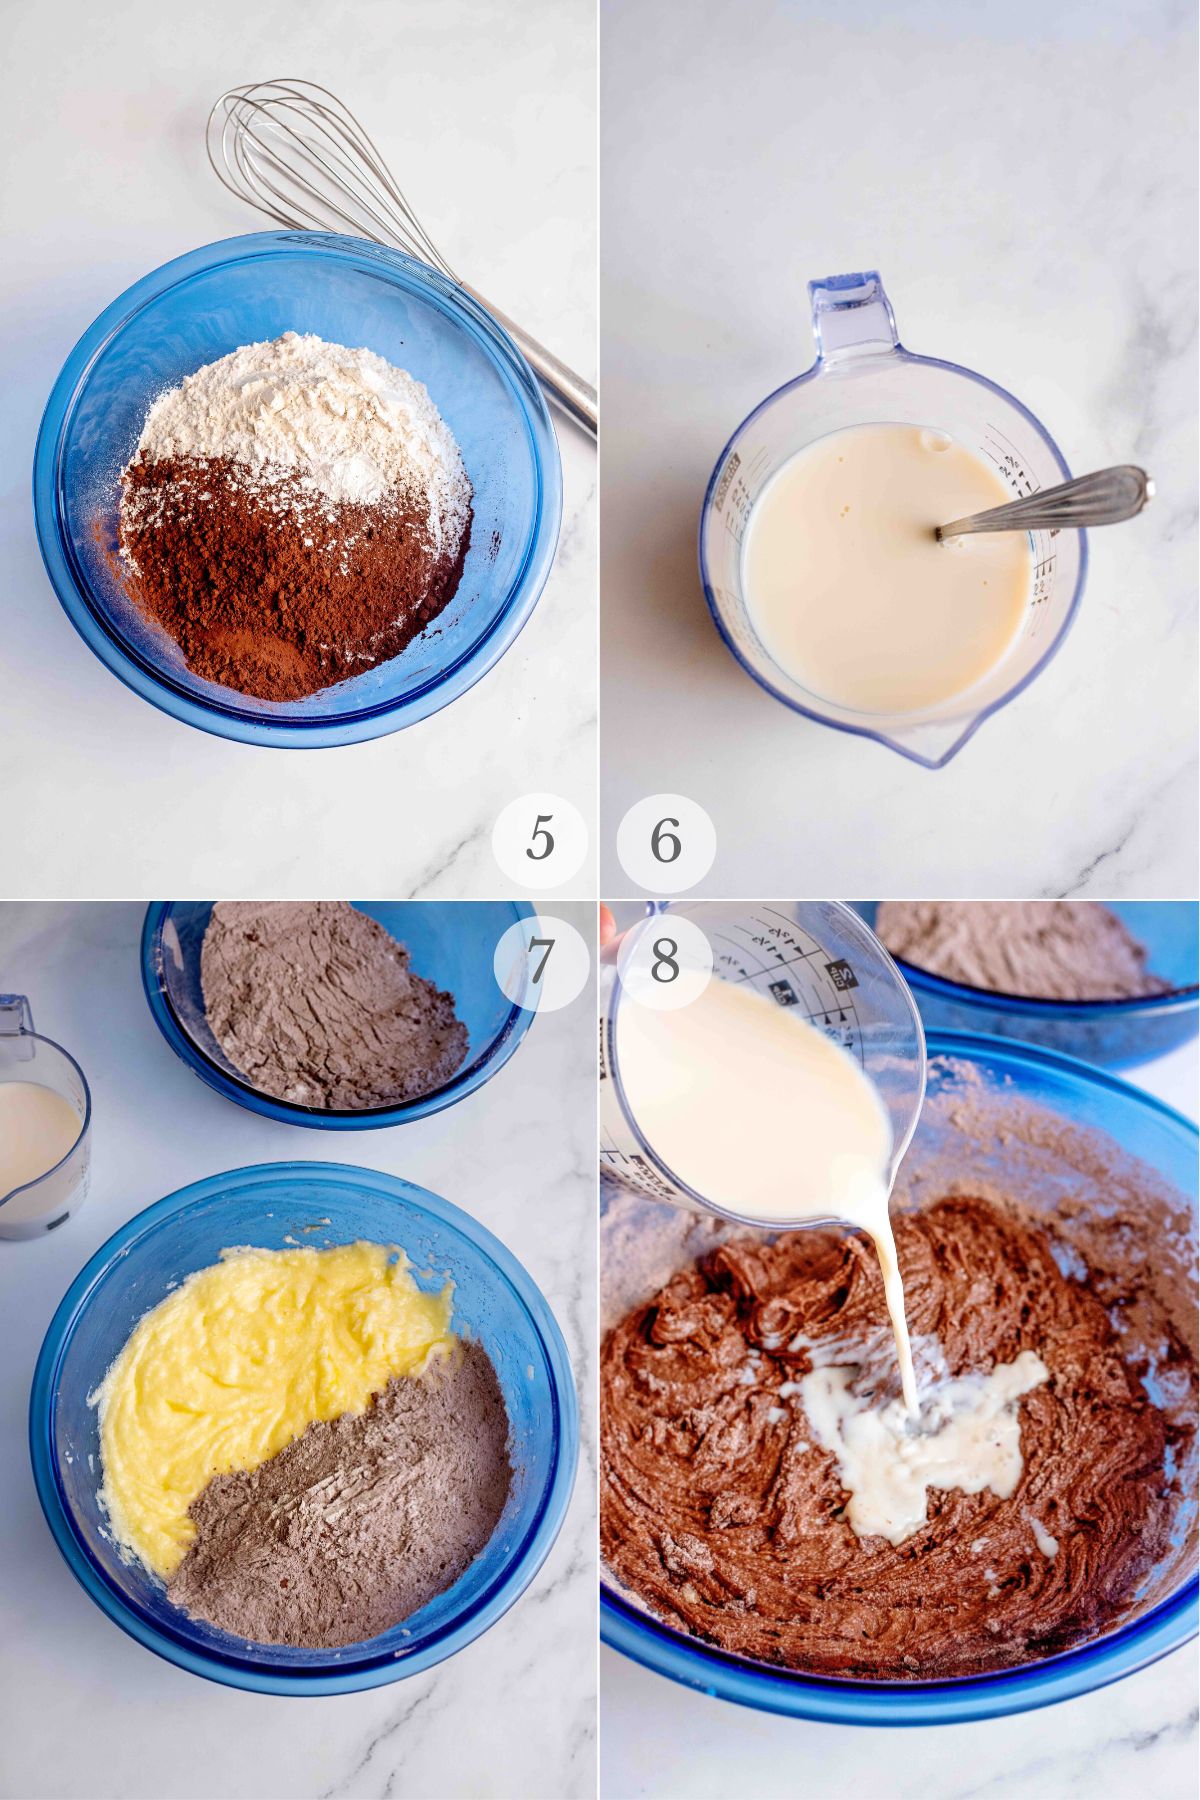 chocolate pound cake recipe steps 5-8.